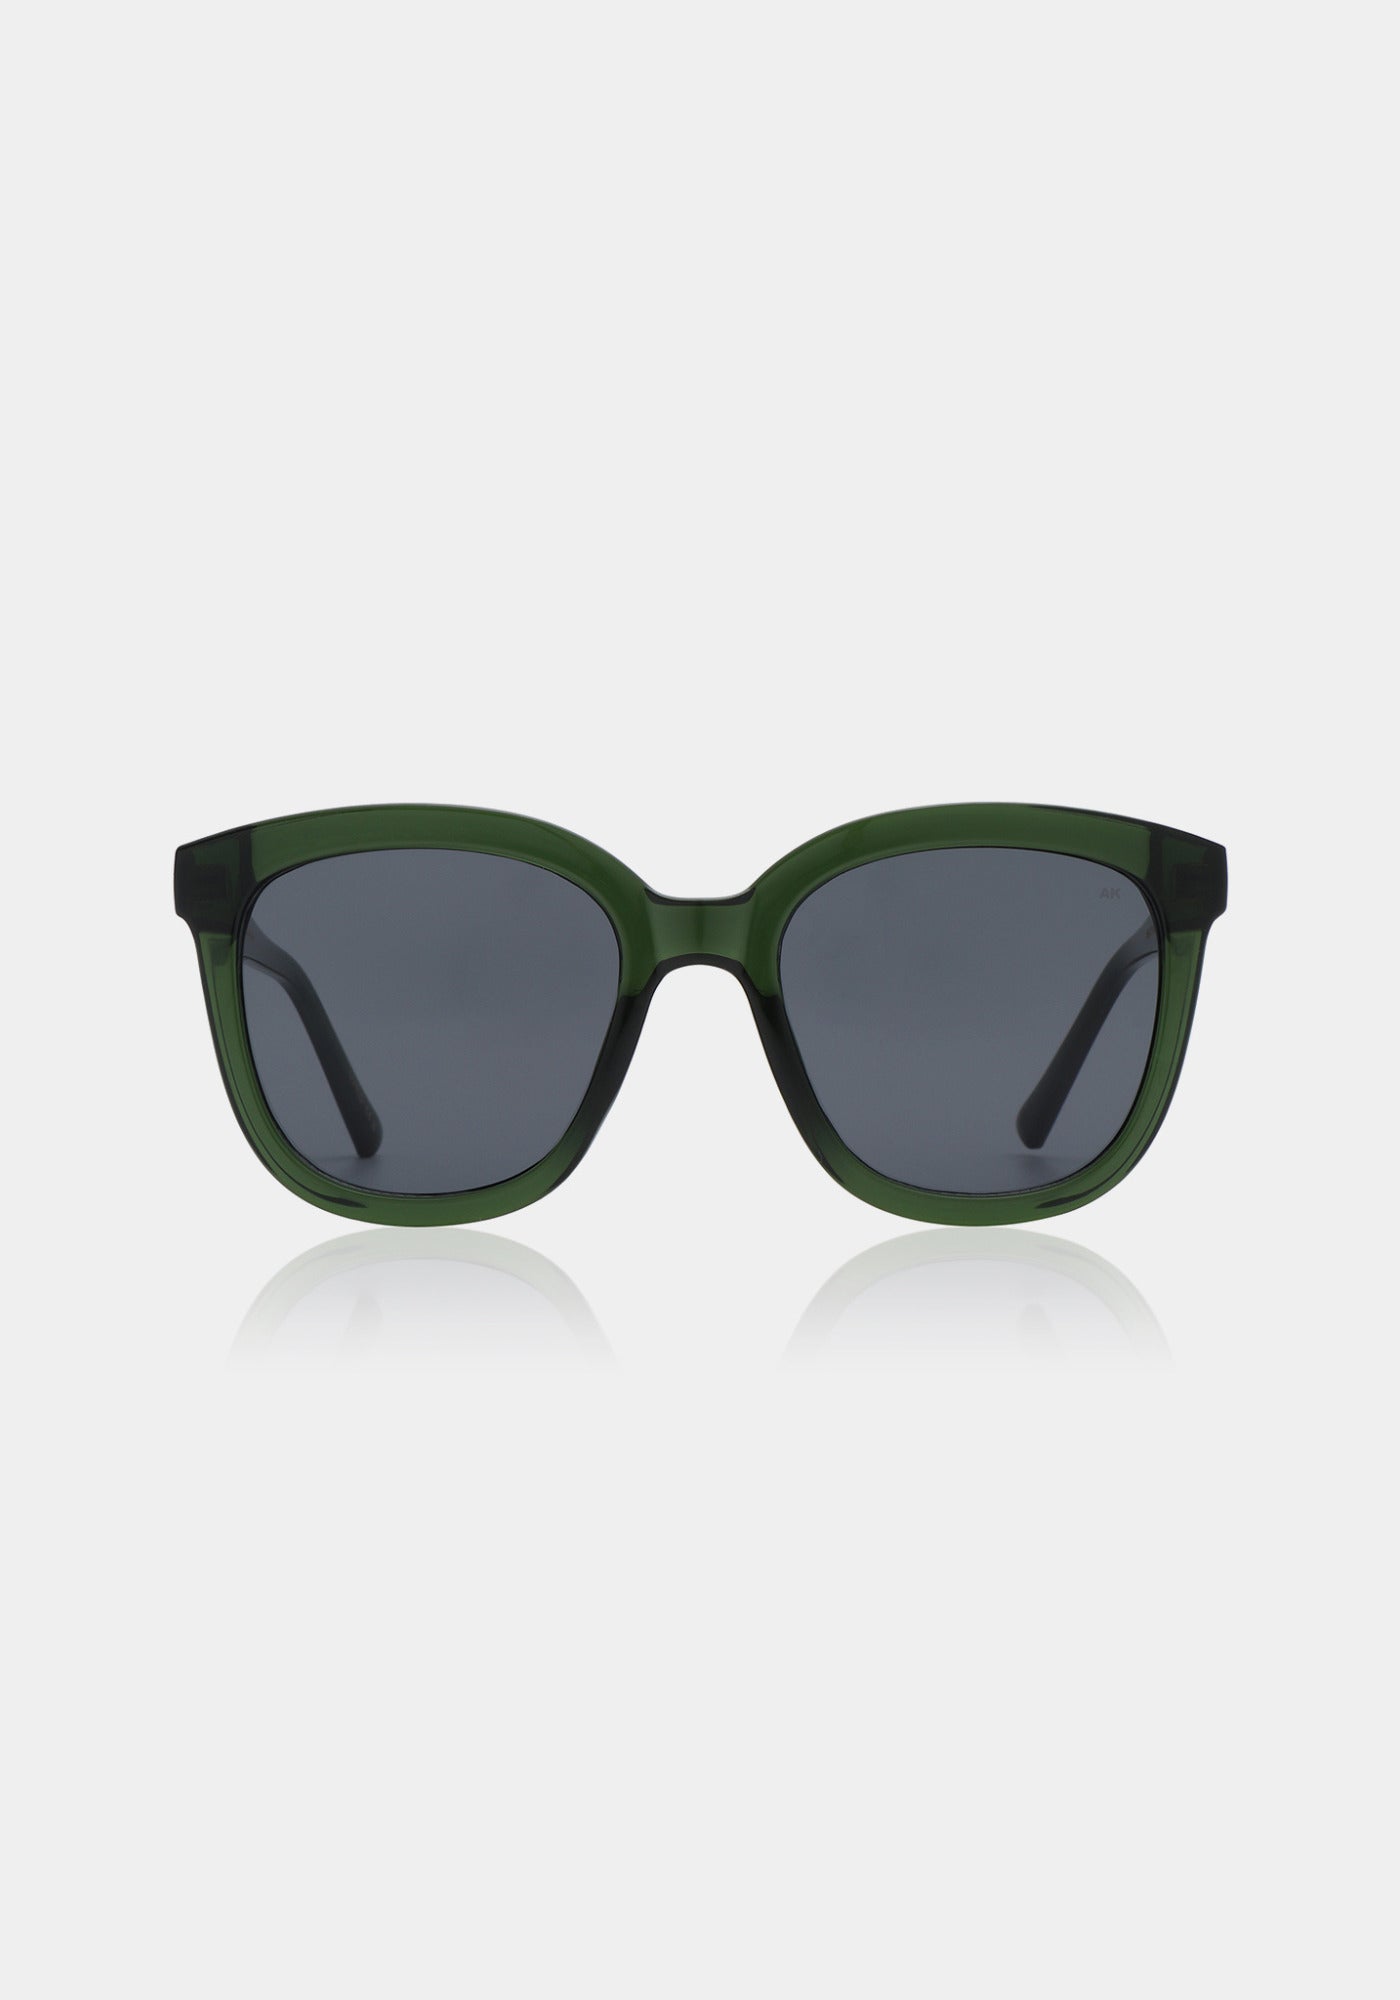 Les lunettes de soleil Billy dark green transparent de chez A.Kjaerbede